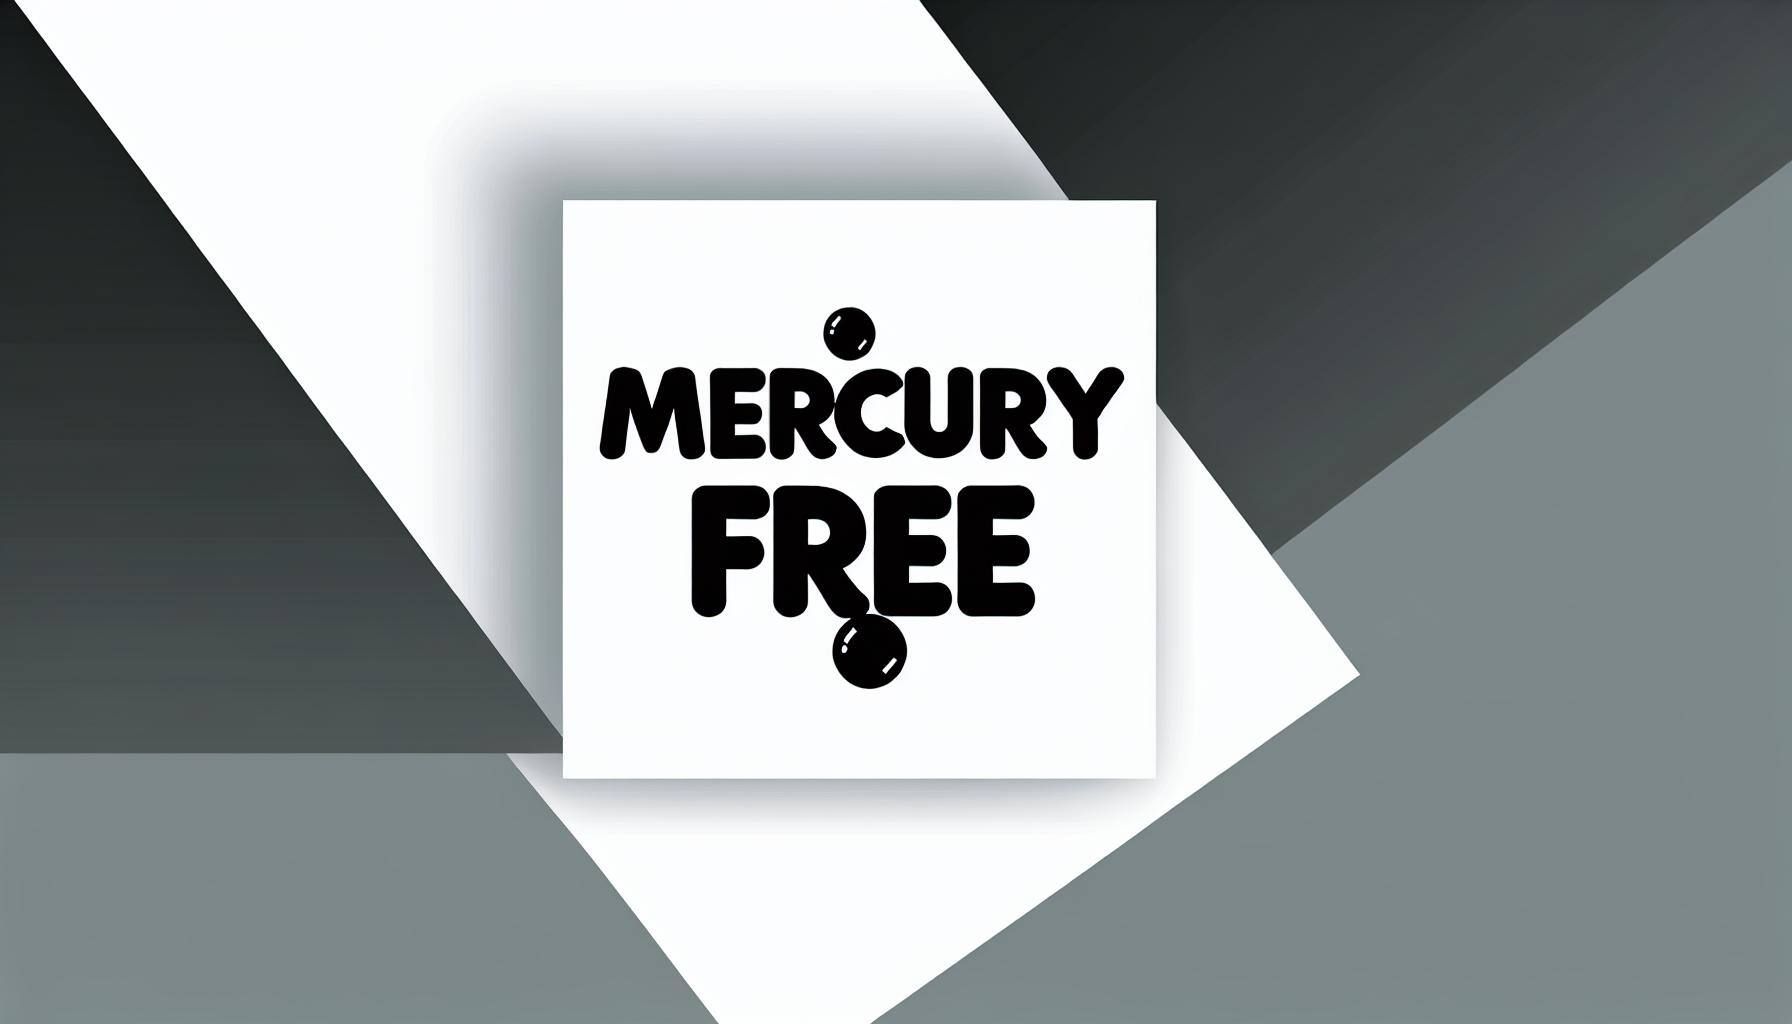 A Mercury free sign